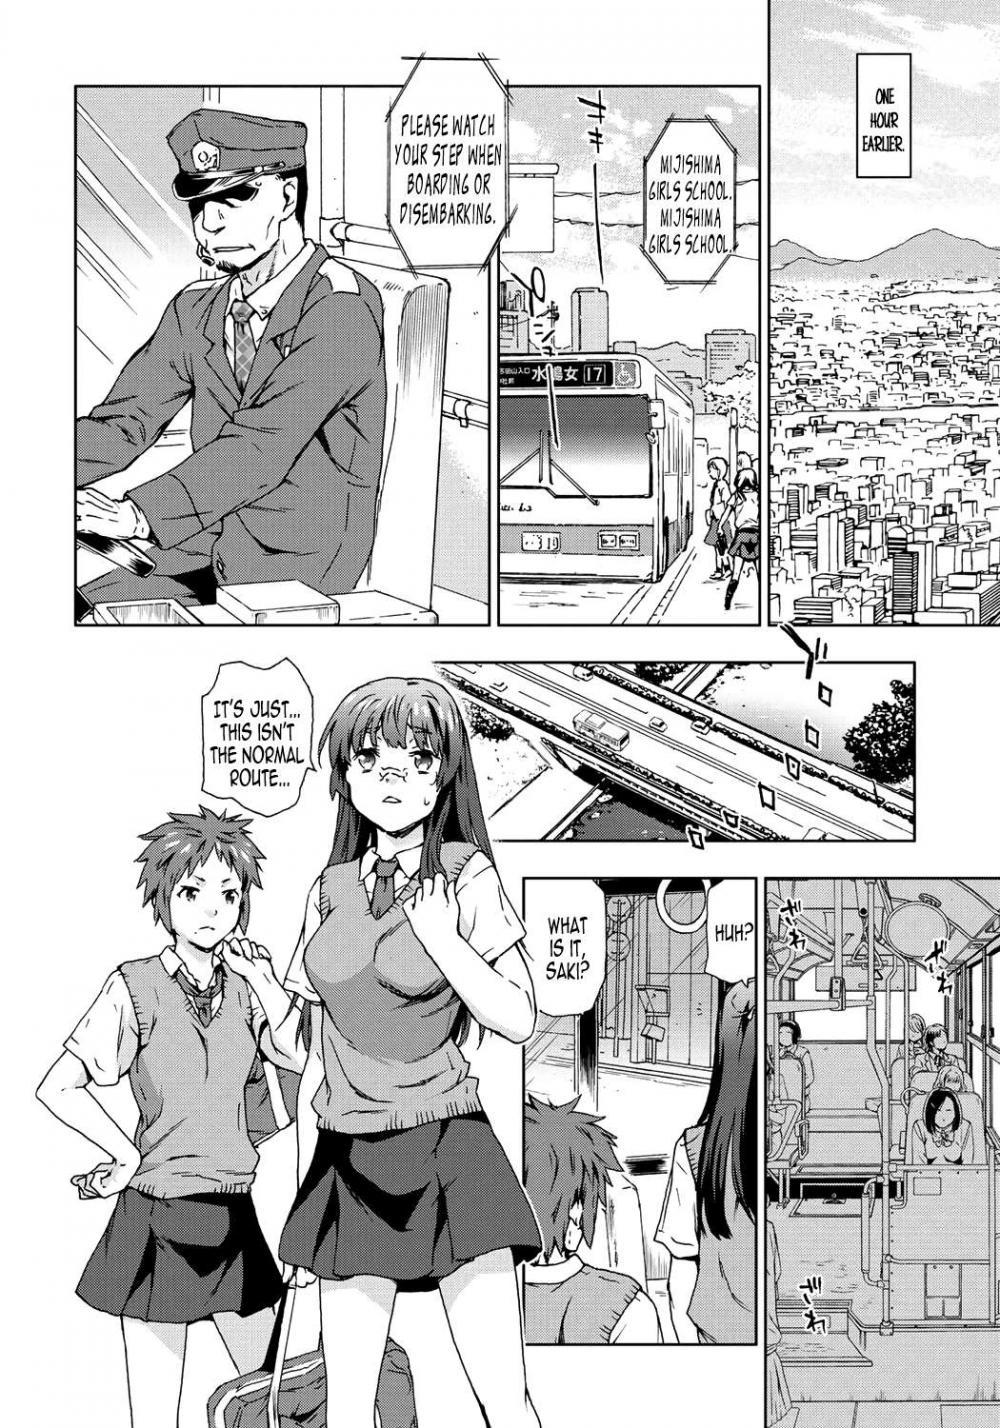 Hentai Manga Comic-Mass R*pe of Sleeping Middle Schoolers! The R*pe Bus-Read-4